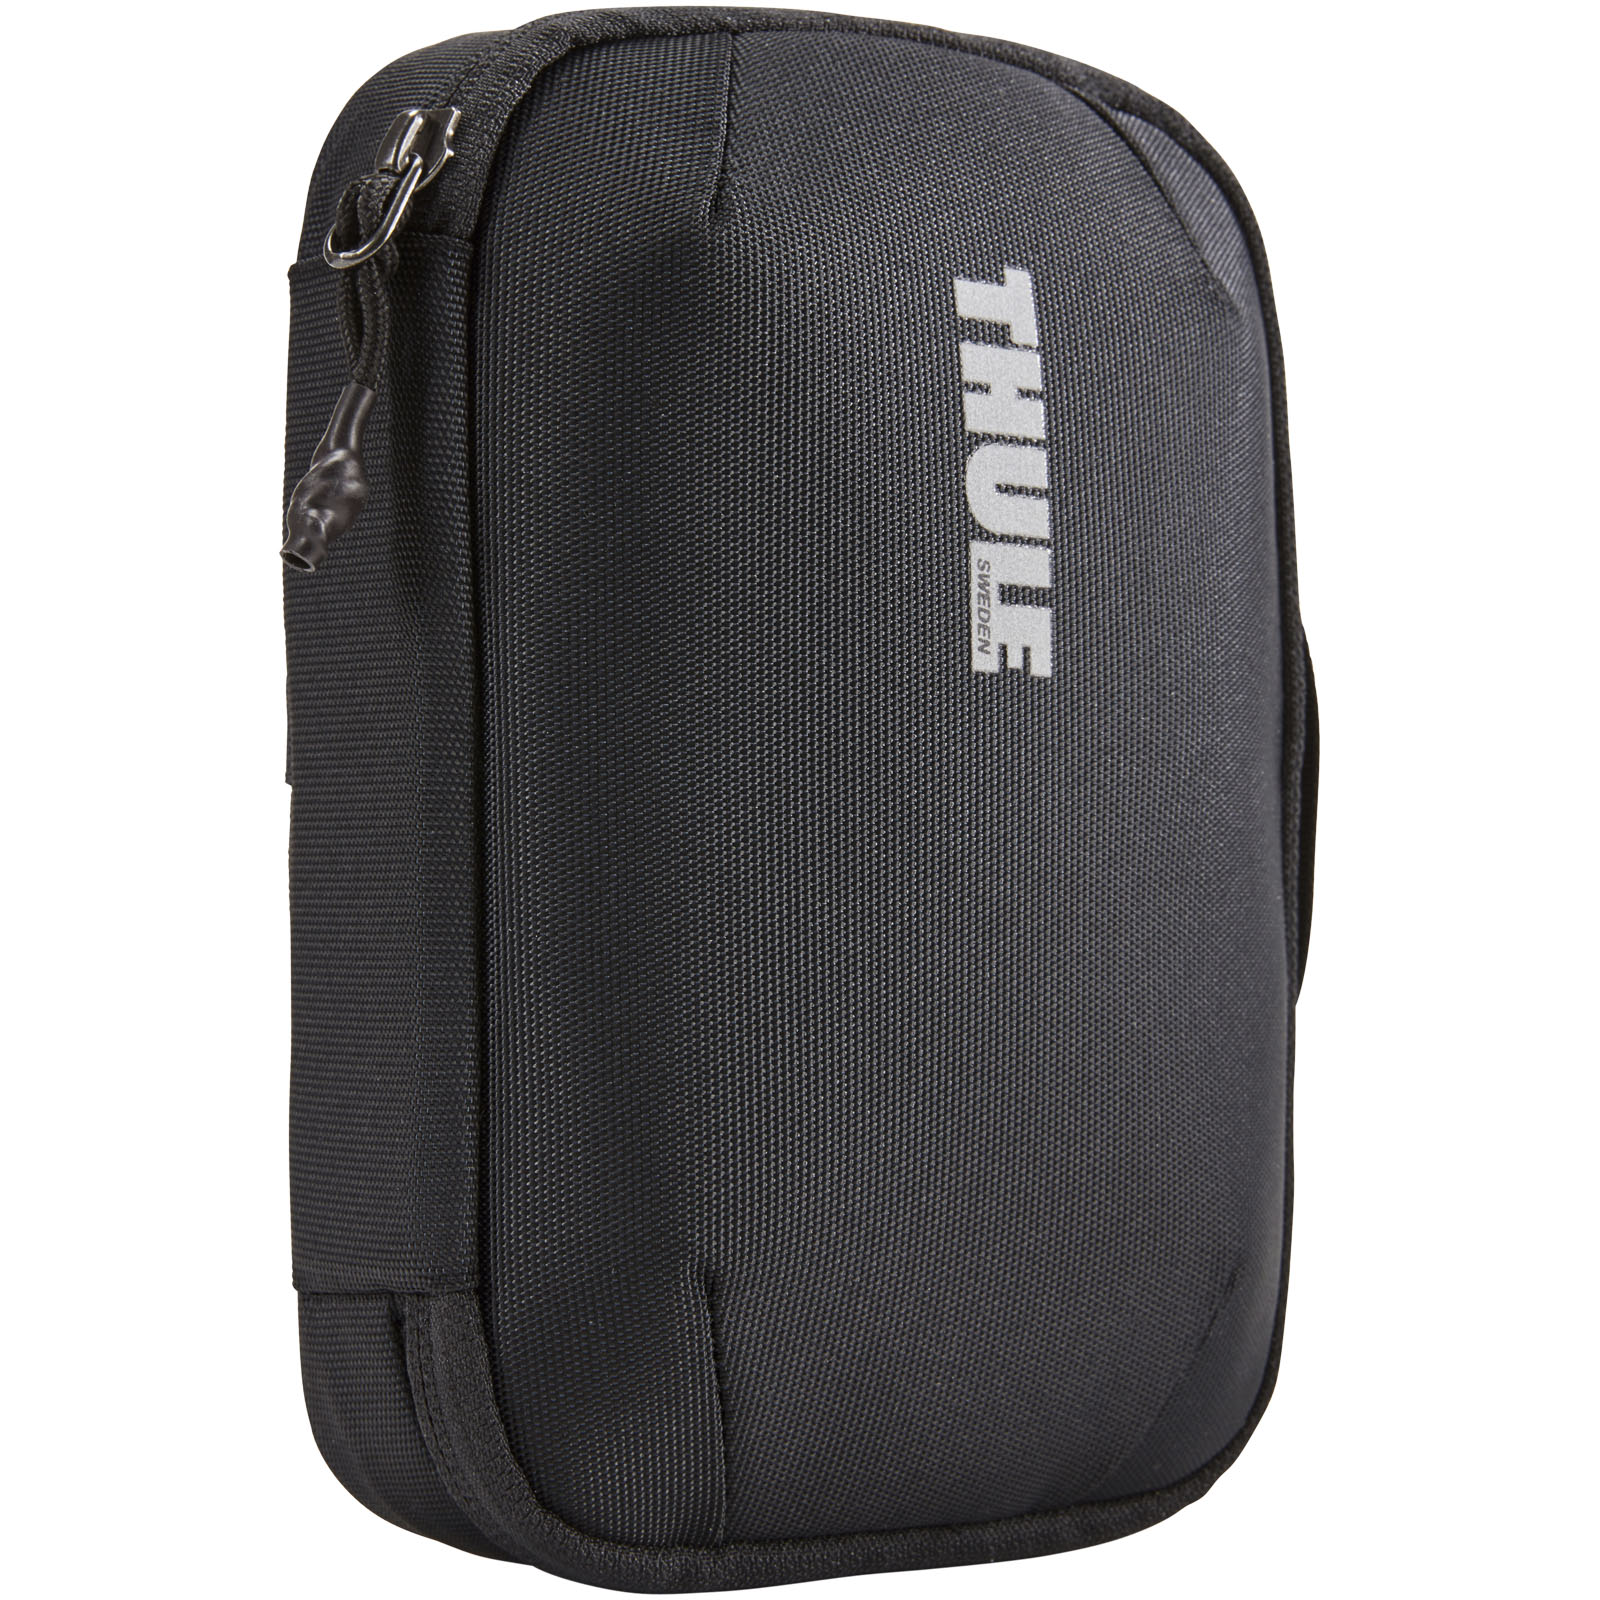 Advertising Travel Accessories - Thule Subterra PowerShuttle accessories bag - 0